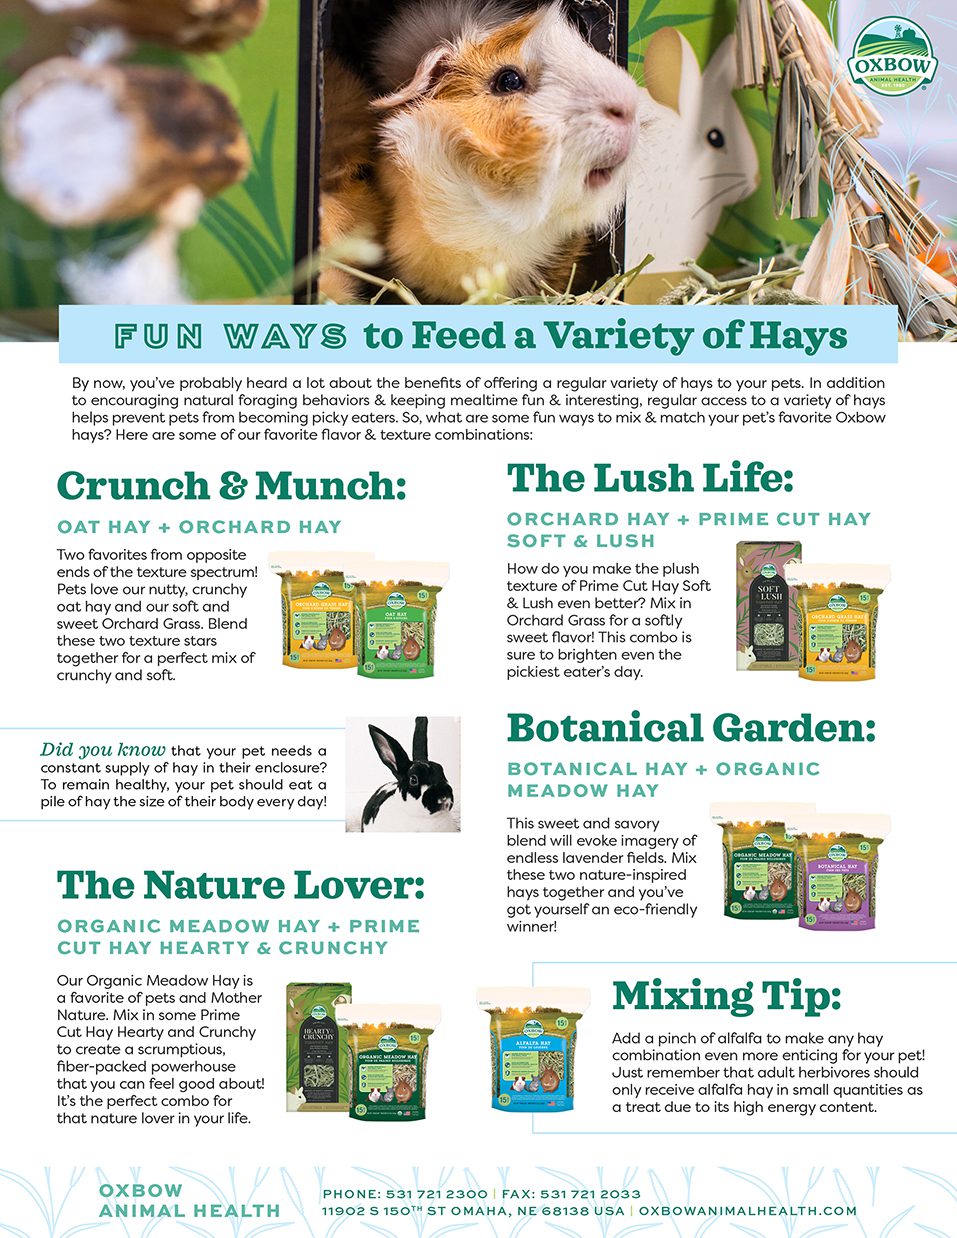 Fun Ways to Feed A Variety of Hays - Oxbow Animal Health